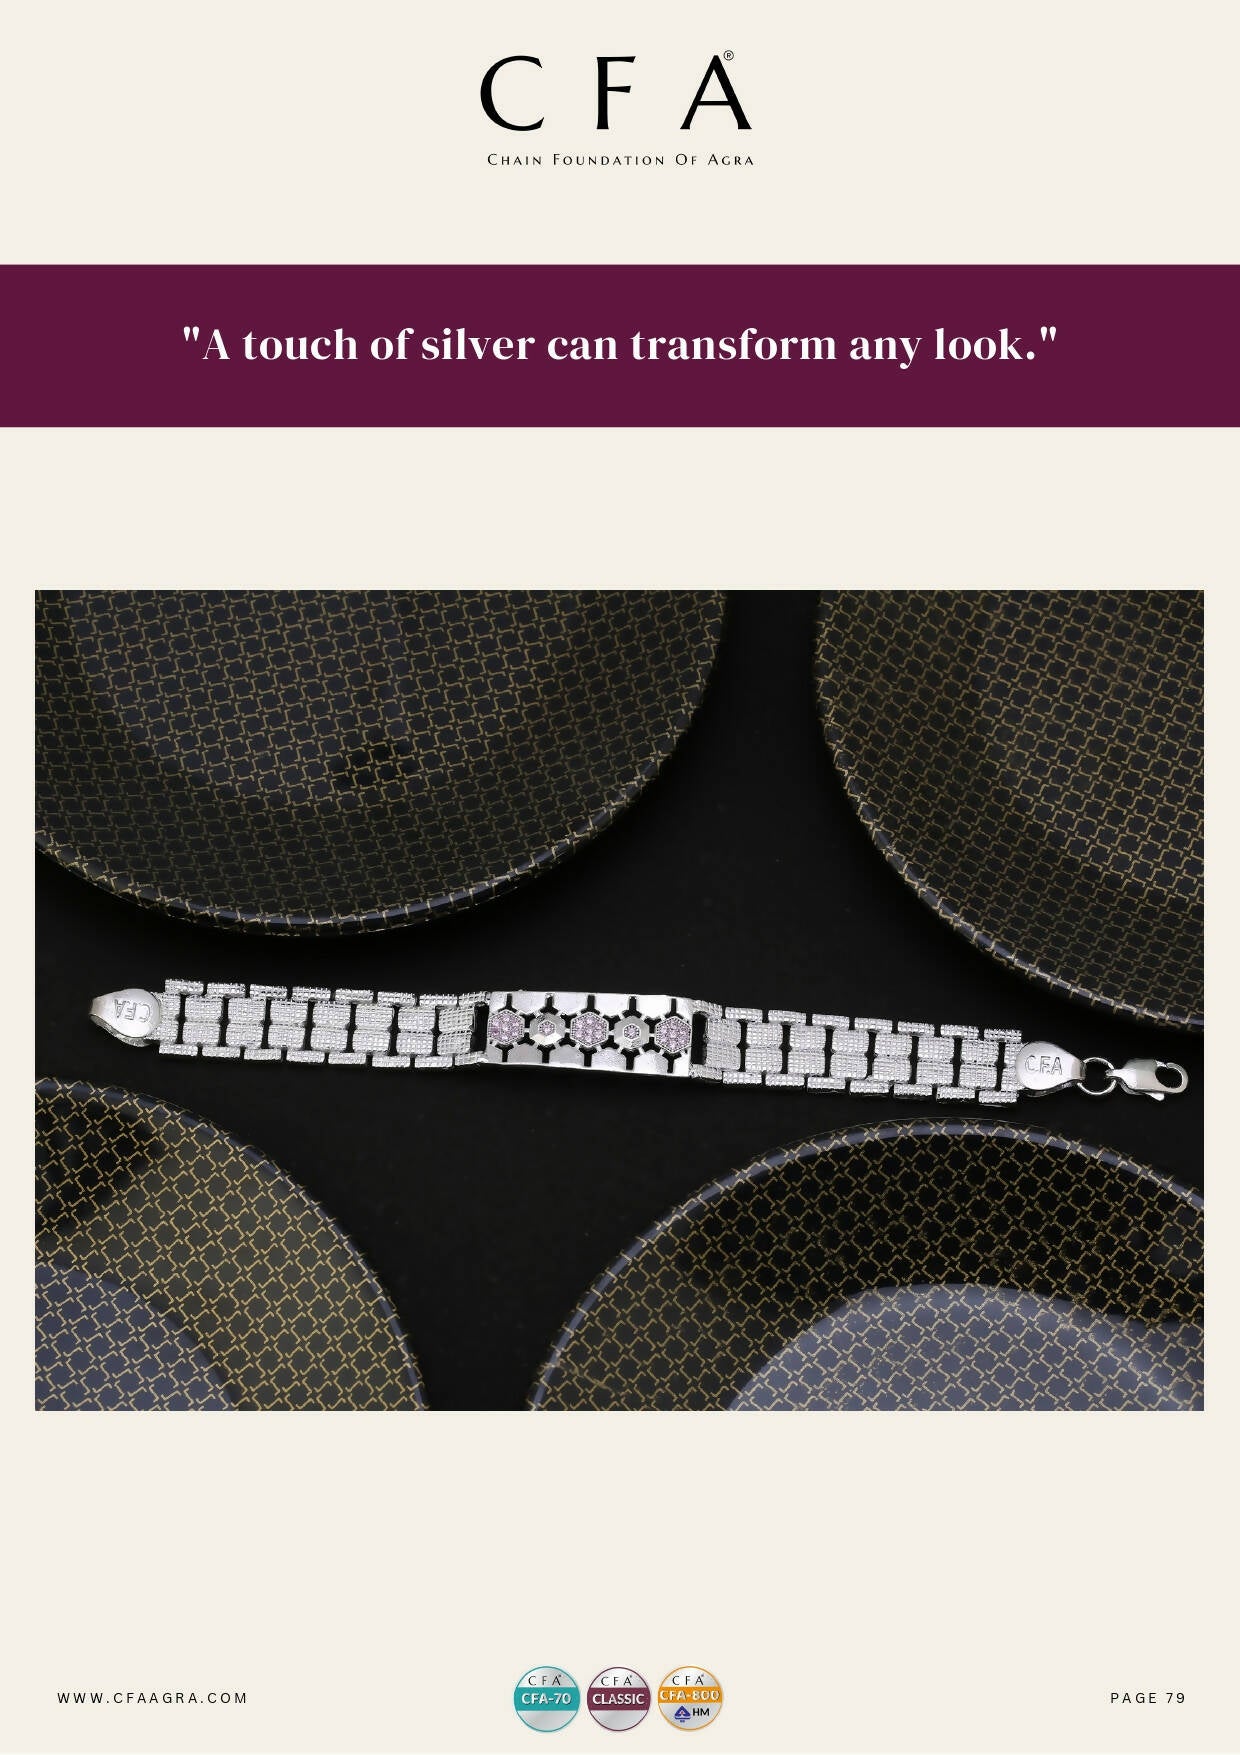 Silver Gents Bracelet Sarafa Bazar India